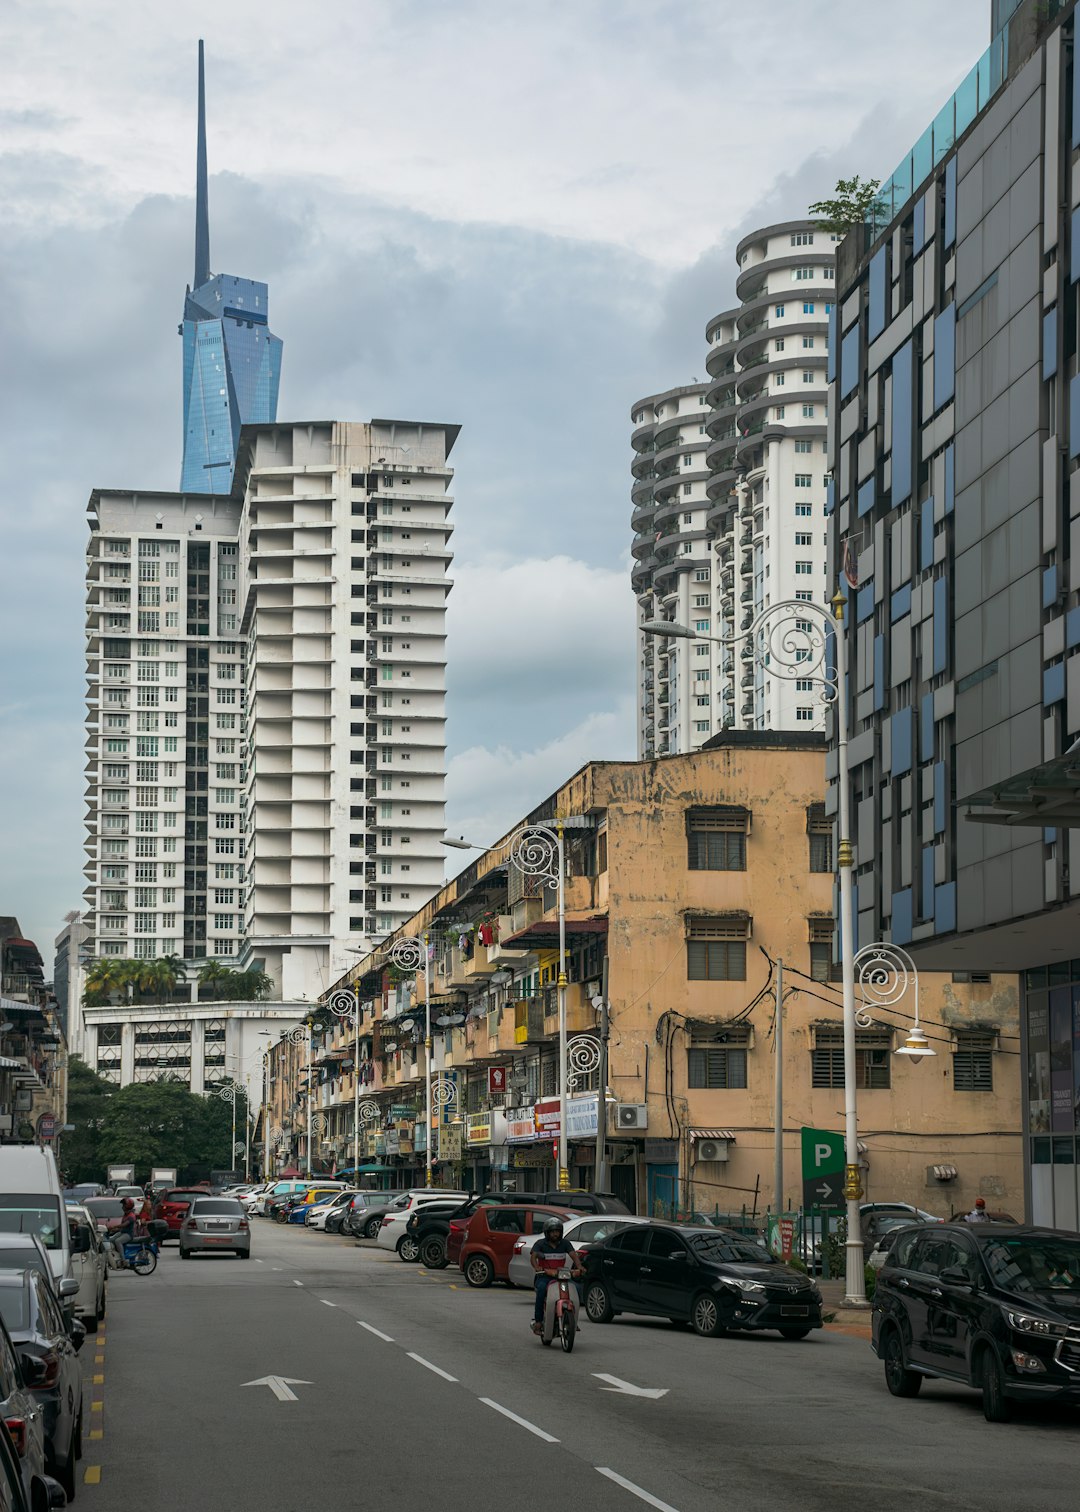 View of Brickfields neighborhood with the Merdeka tower in the background. KLCC, Kuala Lumpur, Malaysia, Apr/23.